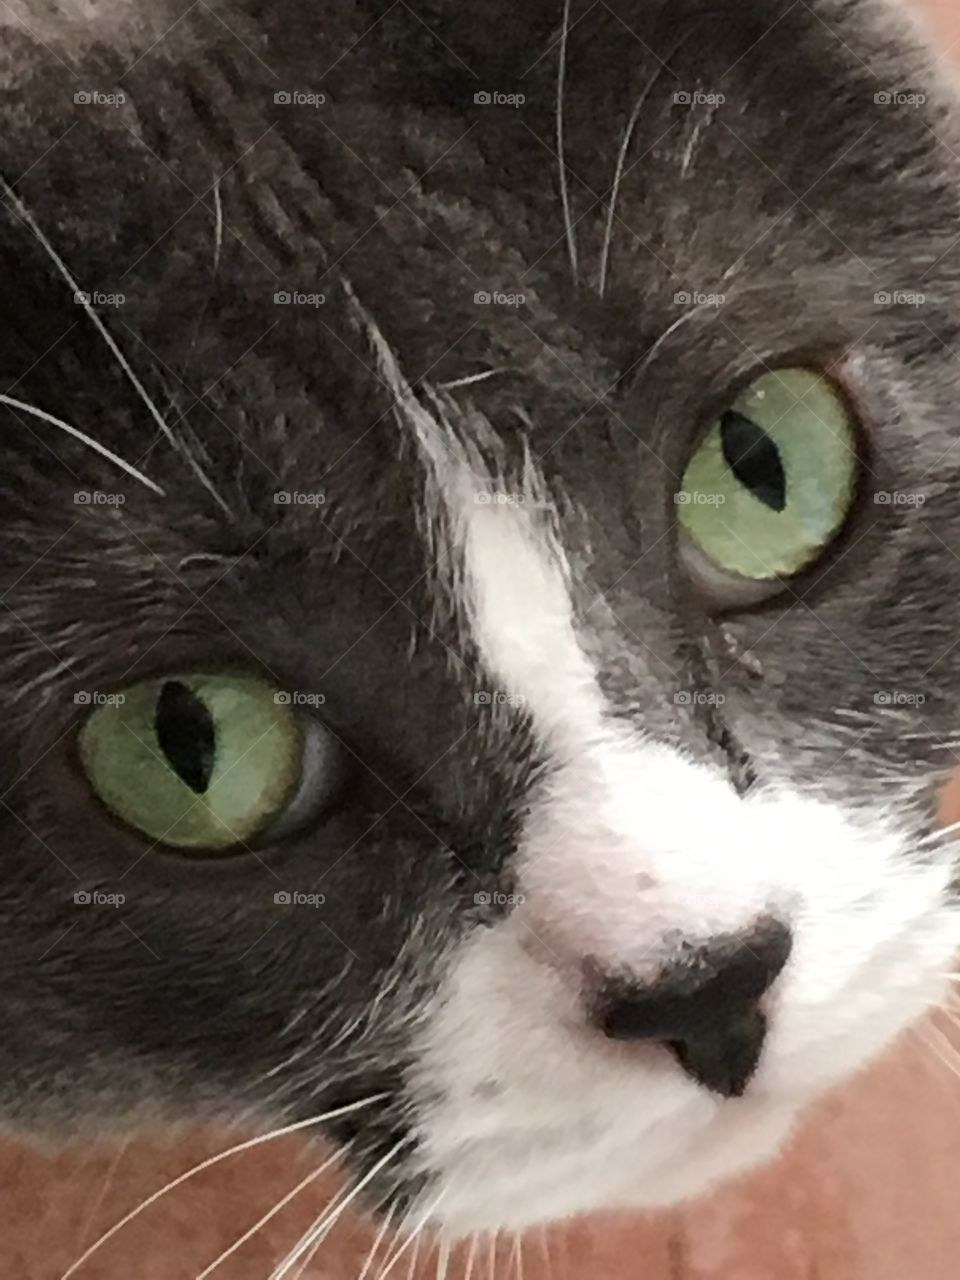 Green eyed cat